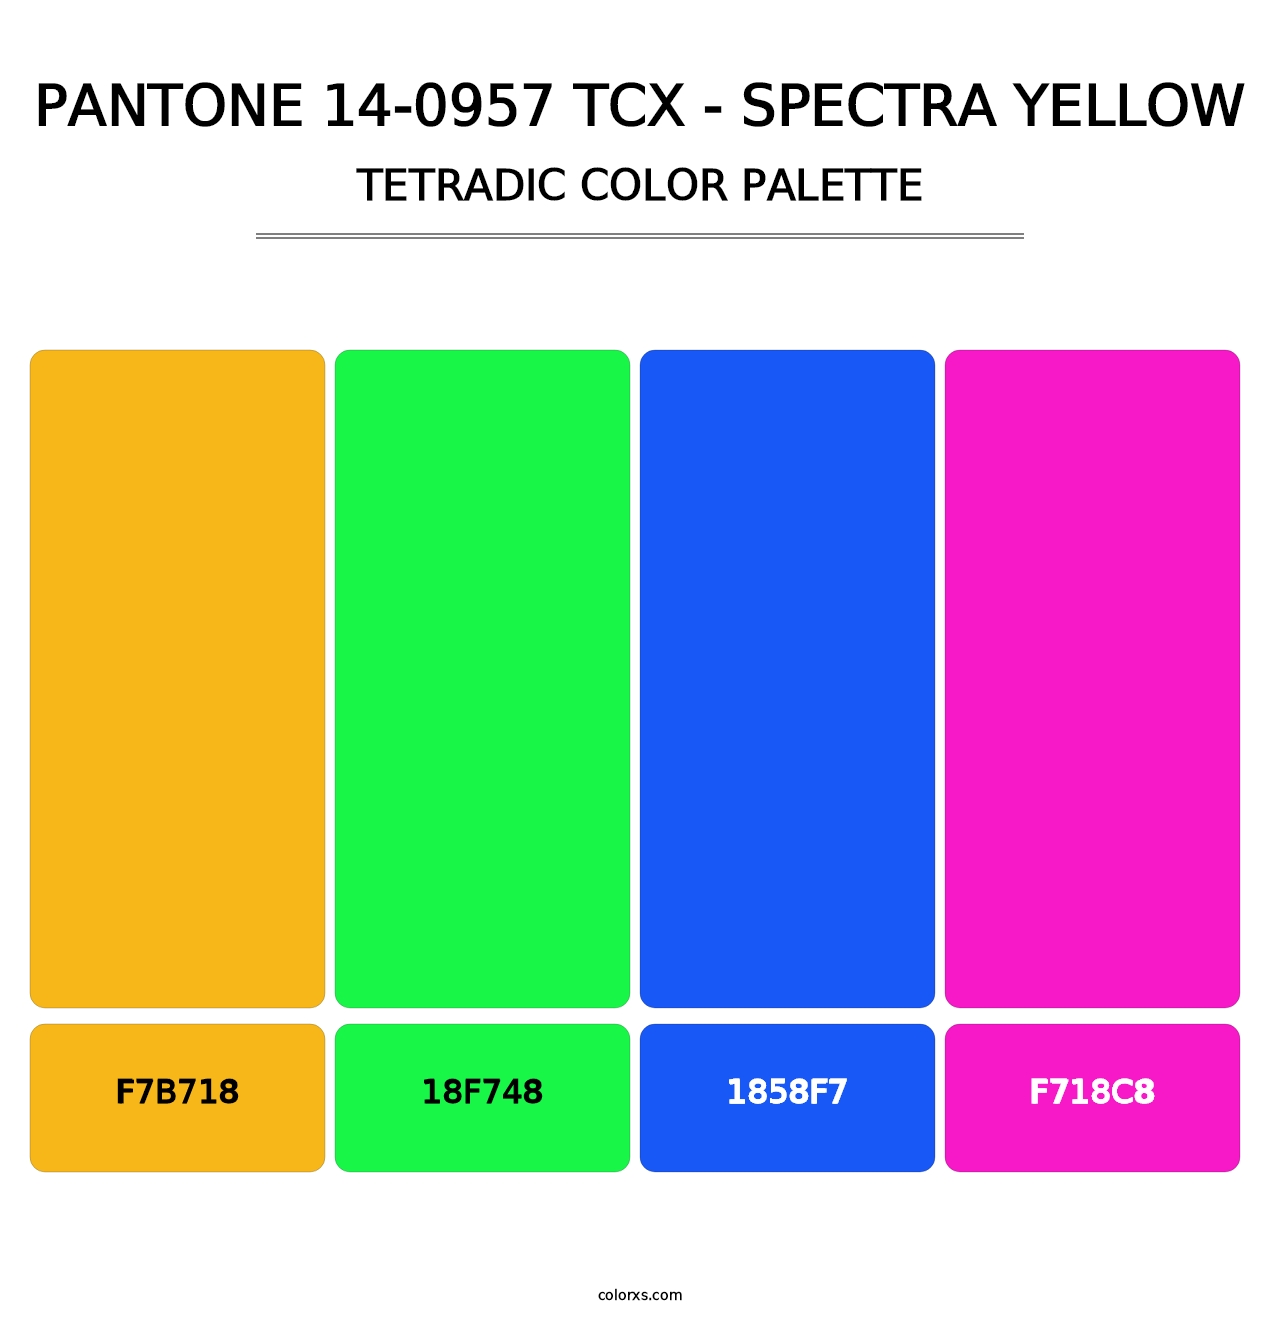 PANTONE 14-0957 TCX - Spectra Yellow - Tetradic Color Palette